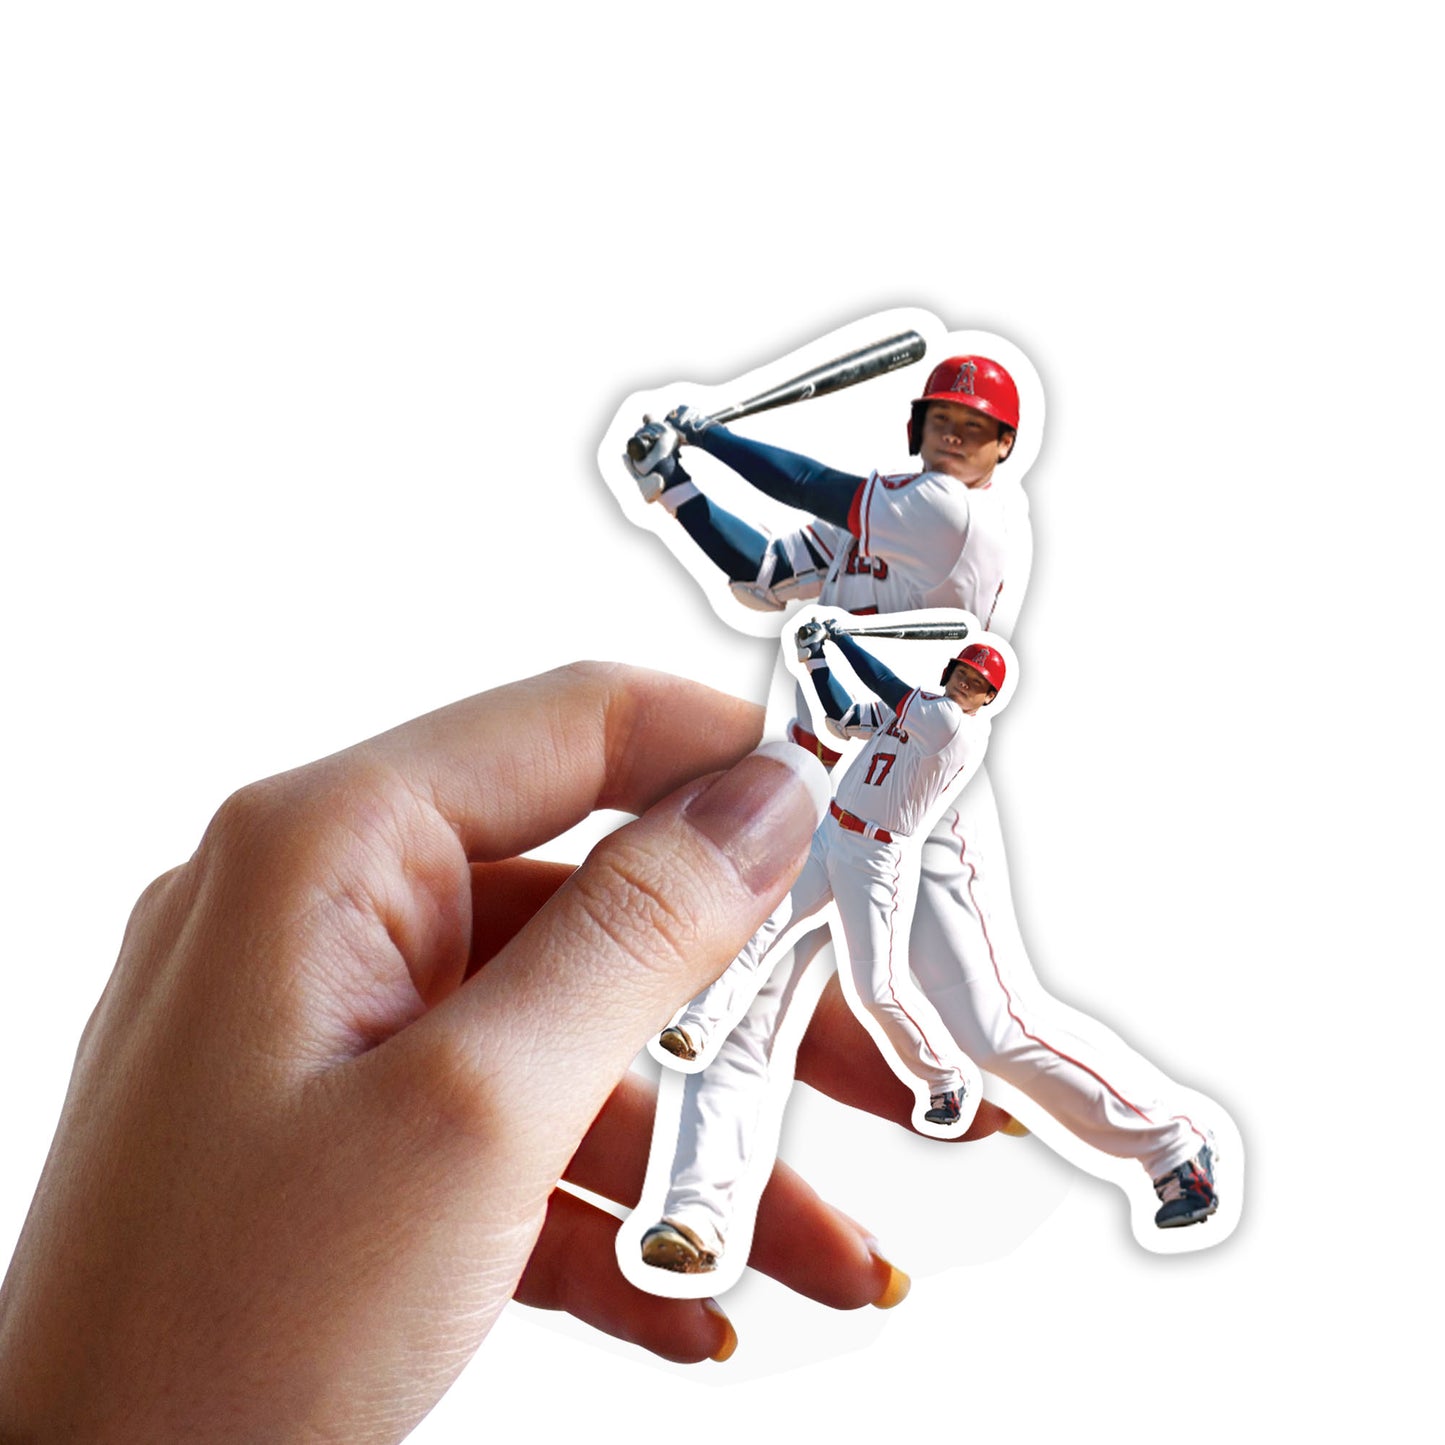 Los Angeles Angels: Shohei Ohtani 2022 Mini Cardstock Cutout